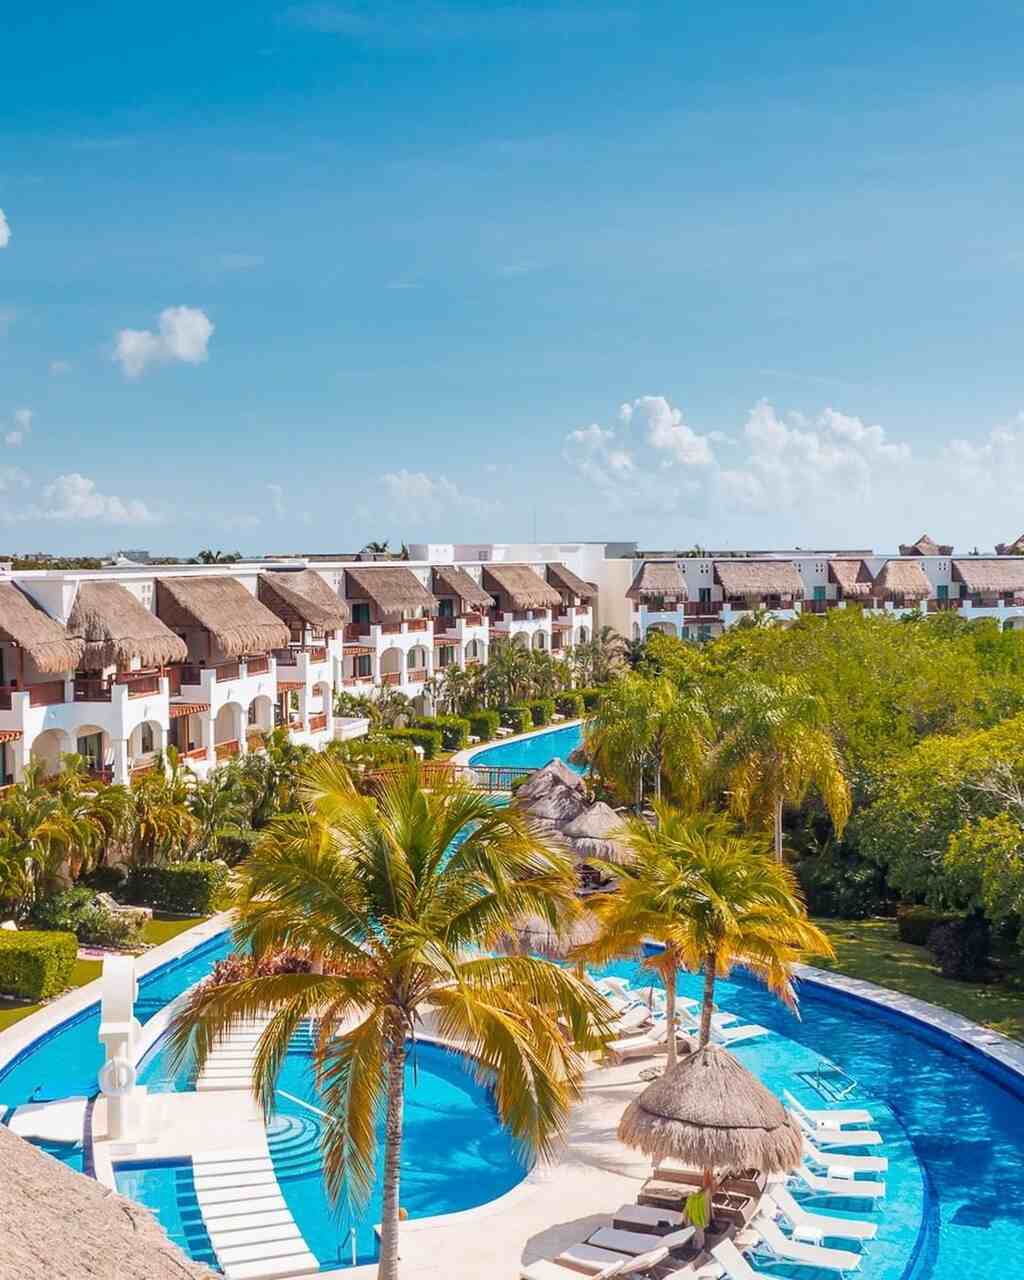 hotel riviera maya